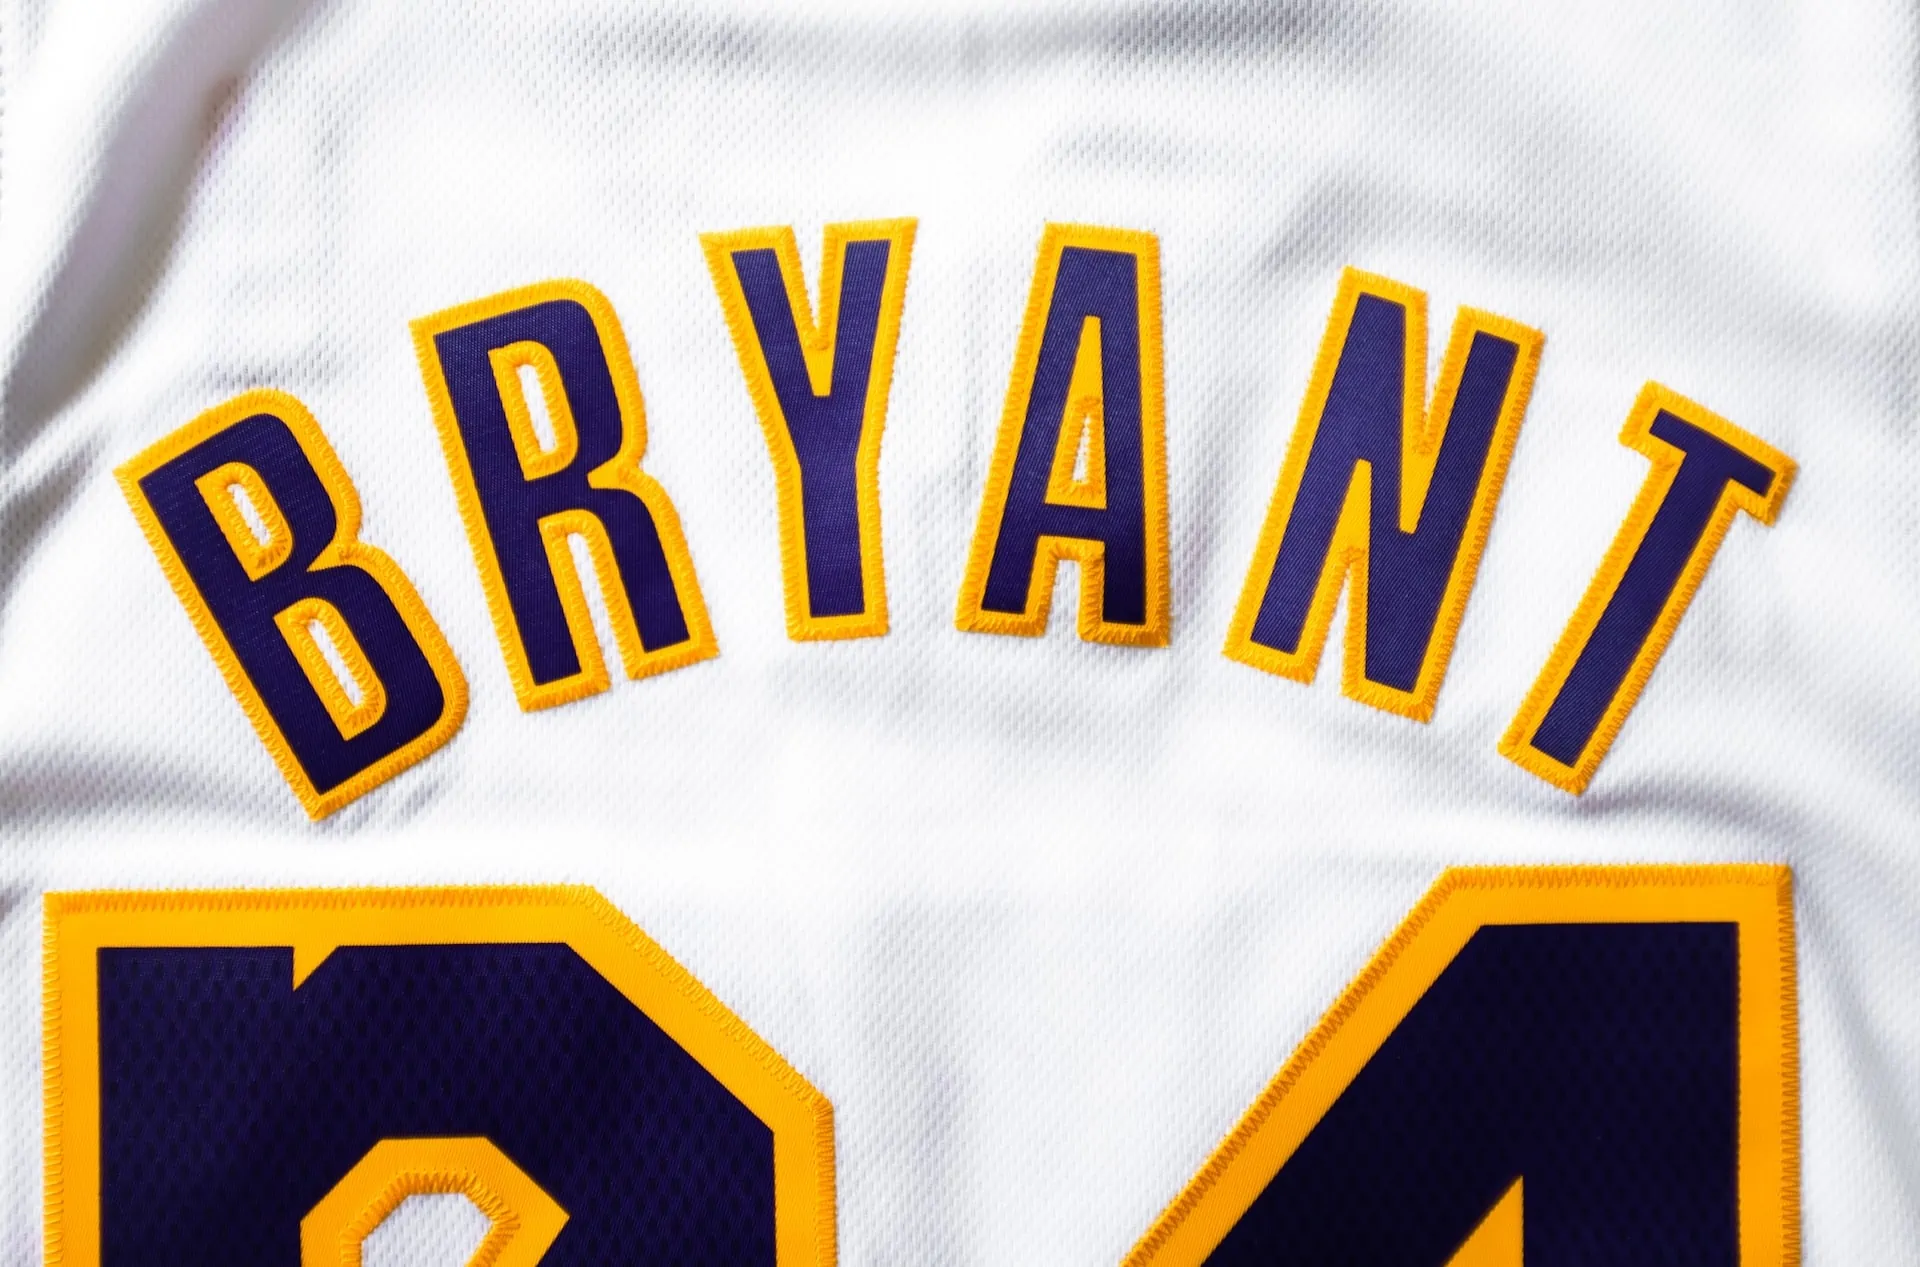 What Numbers Did Kobe Bryant Wear in the NBA